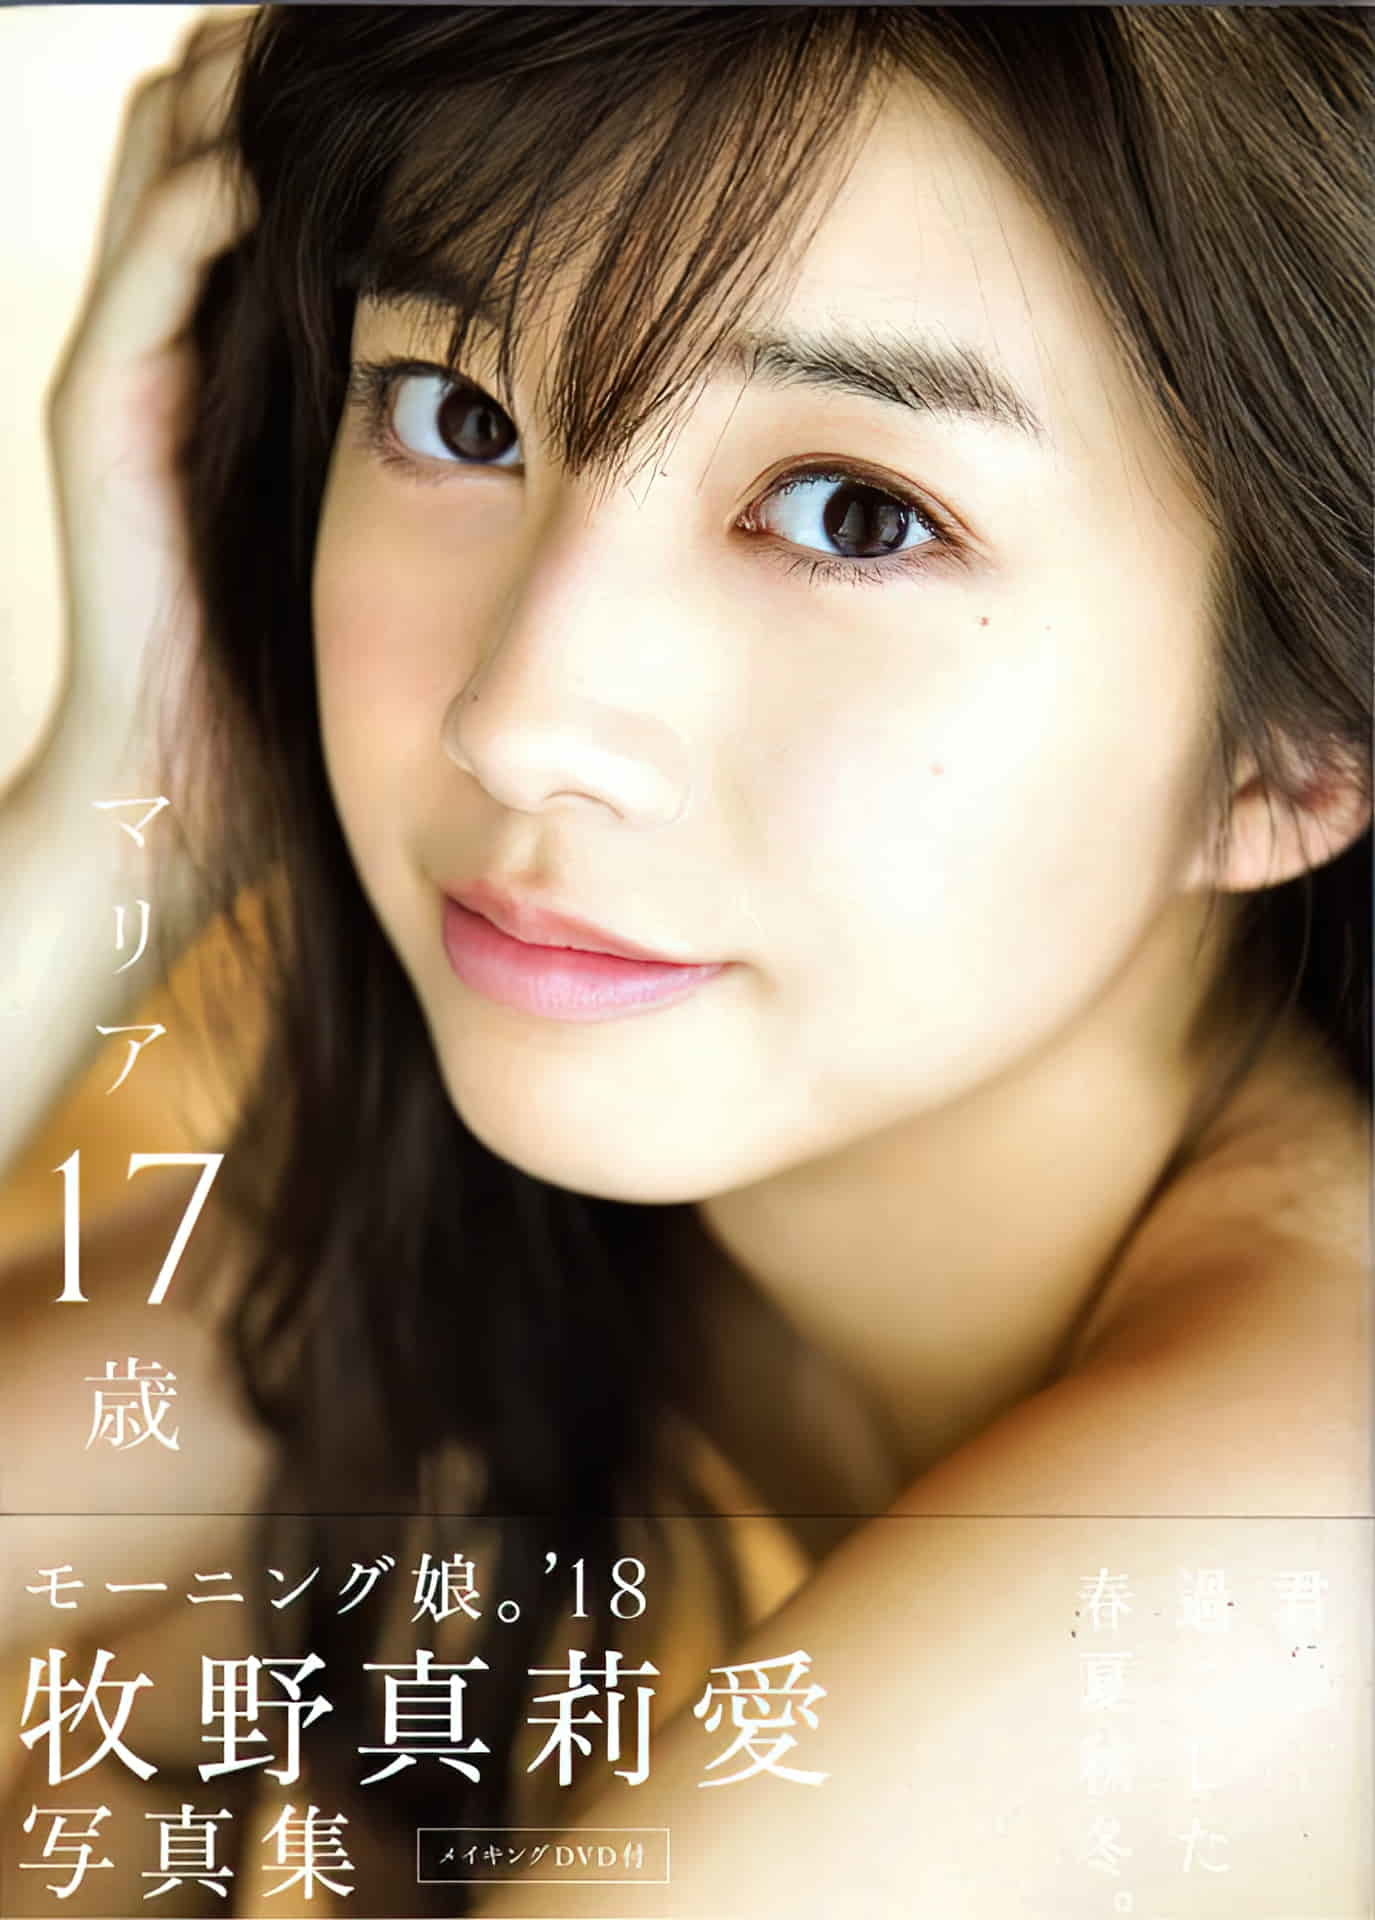 [Photobook] Maria Makino - Maria 17 years old